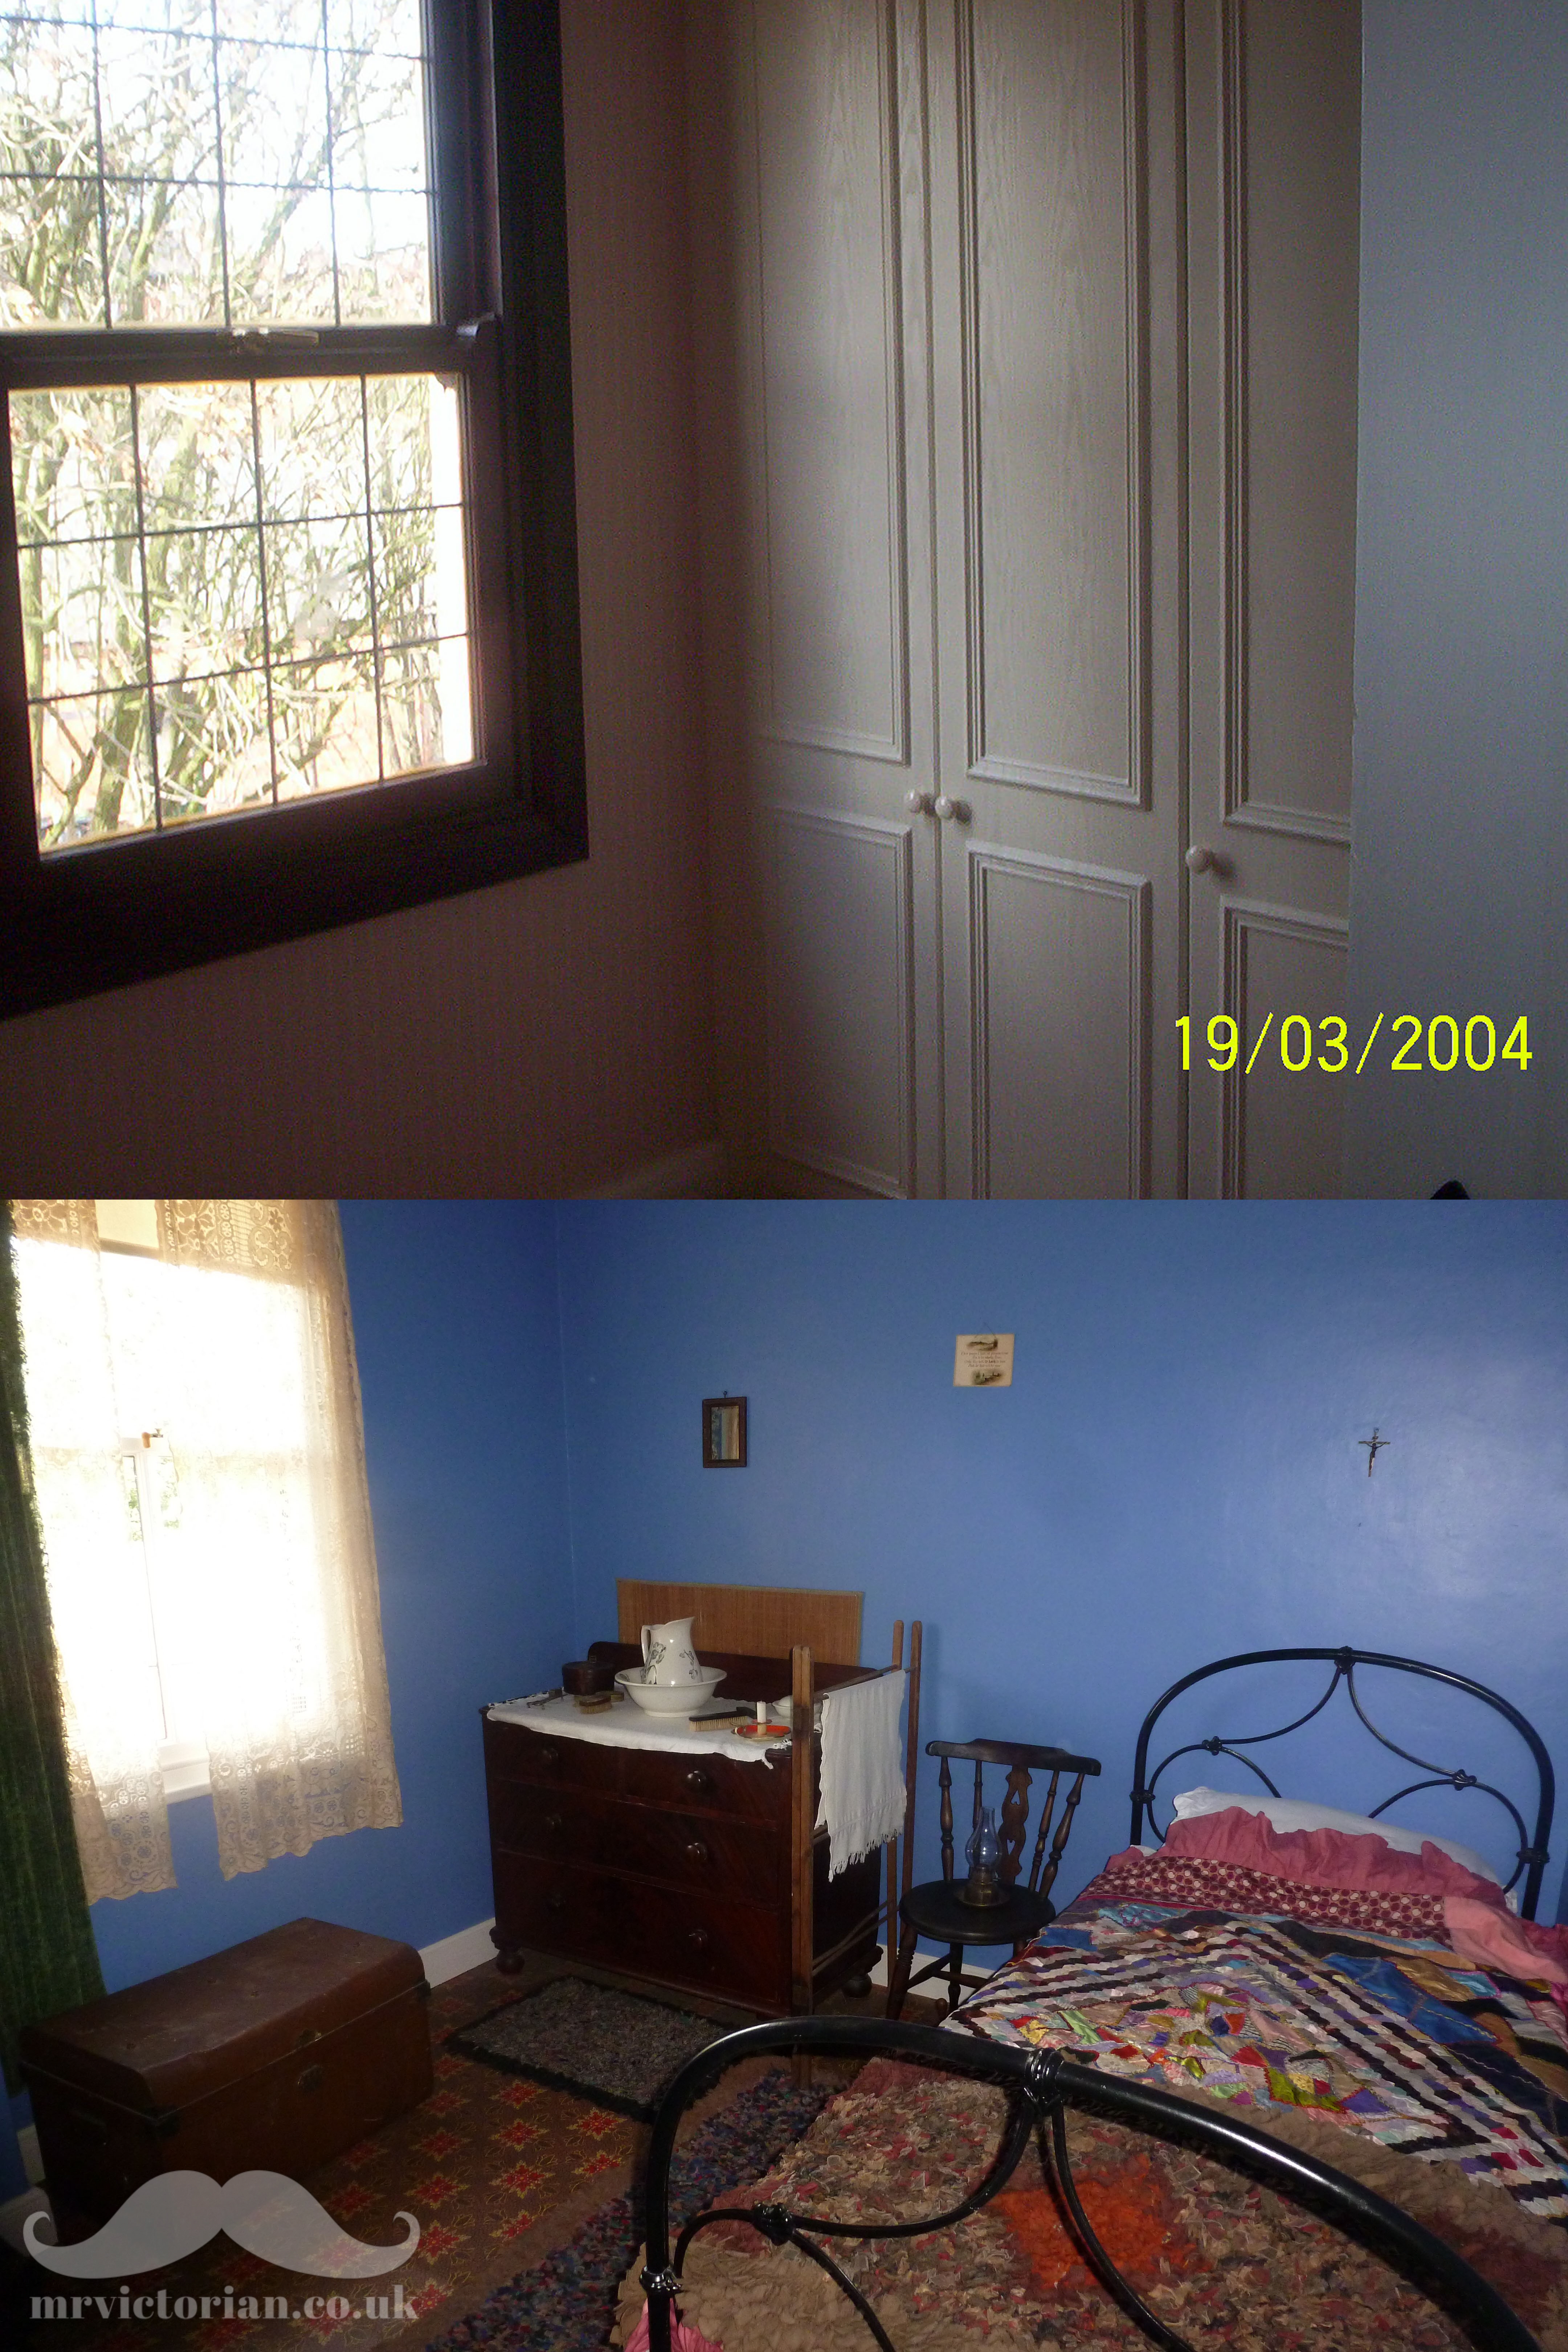 House before bedroom blue iron bed restoration original paint